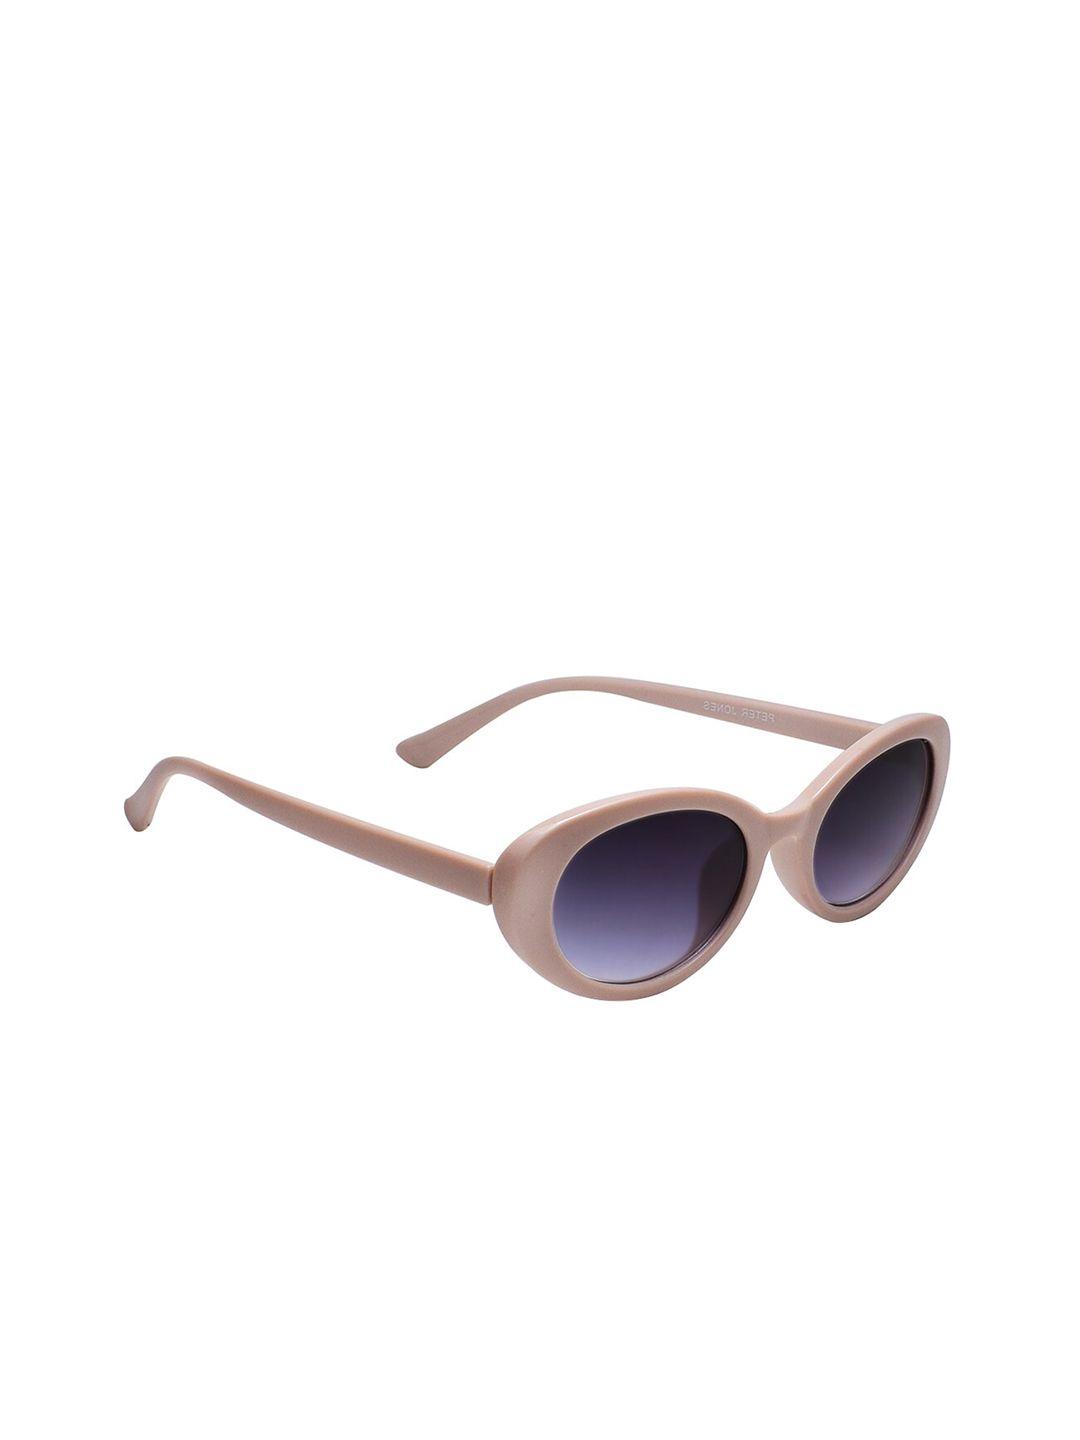 peter jones eyewear women blue lens & brown cateye sunglasses with uv protected lens